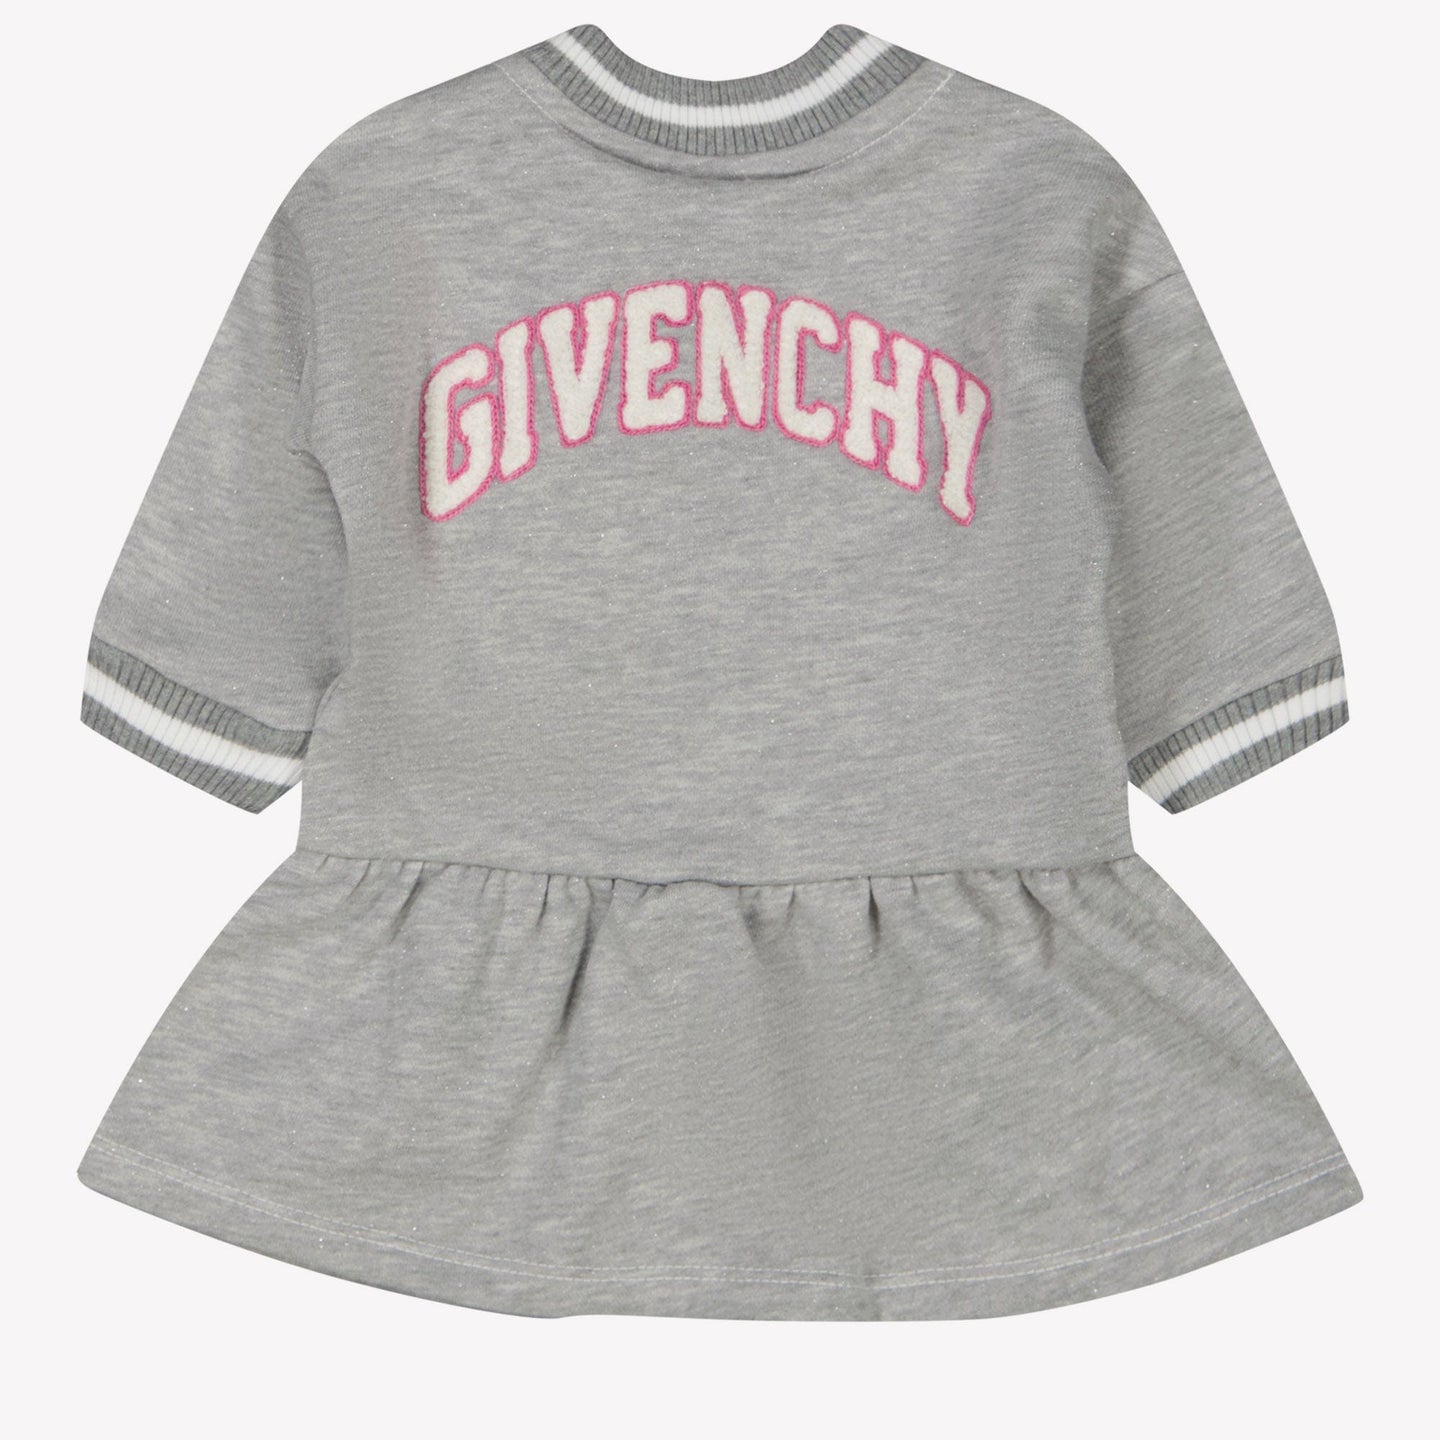 Givenchy Baby Meisjes Jurk Grijs 6 mnd